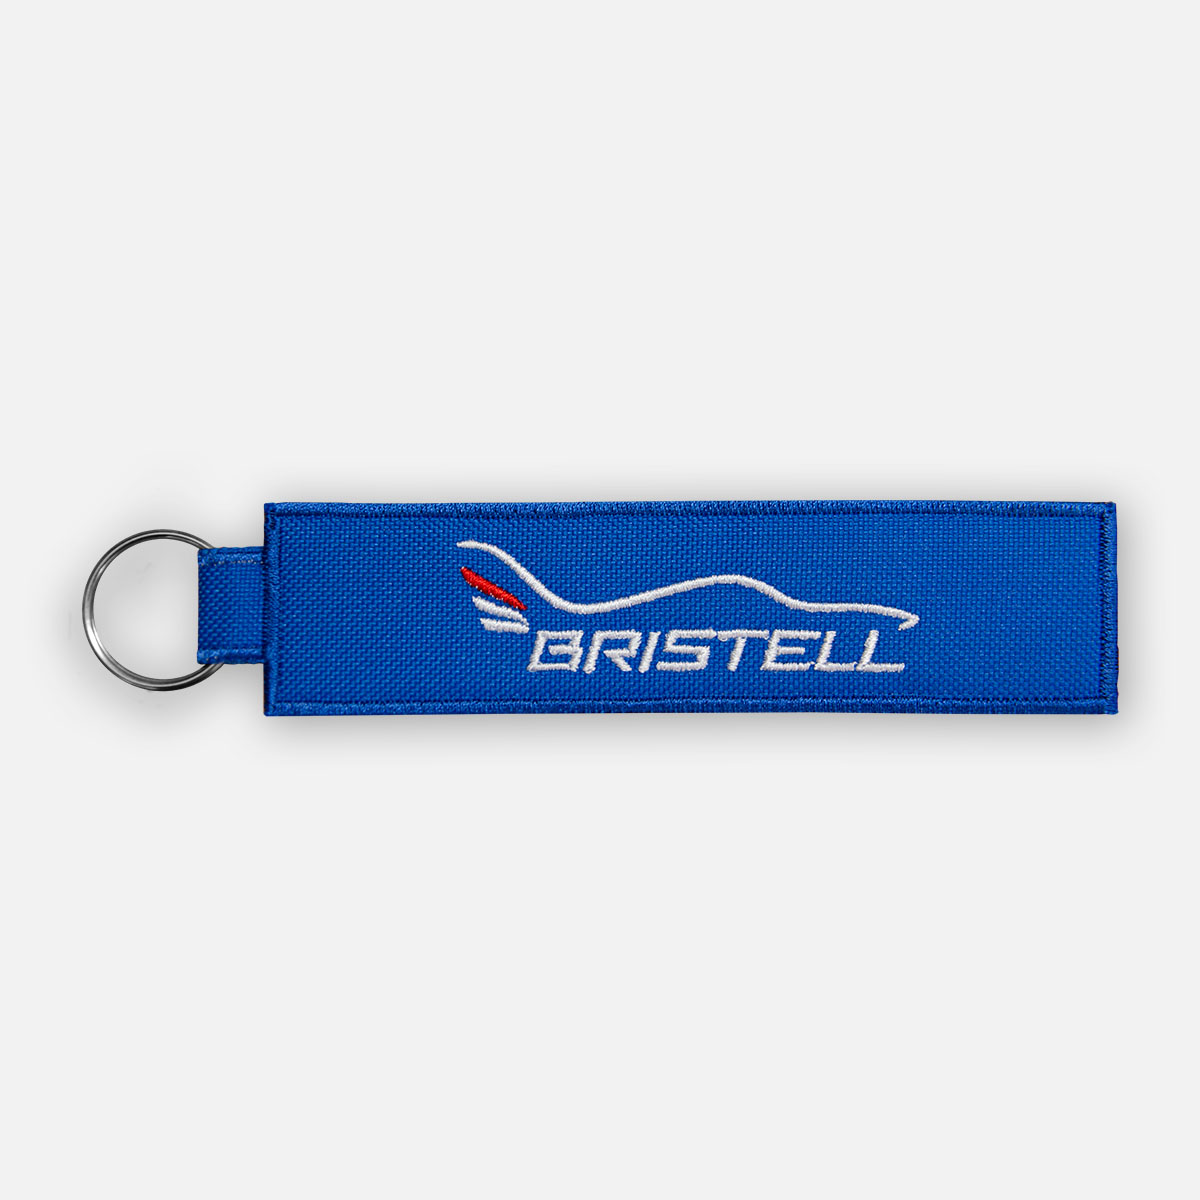 BRISTELL Key Ring light blue